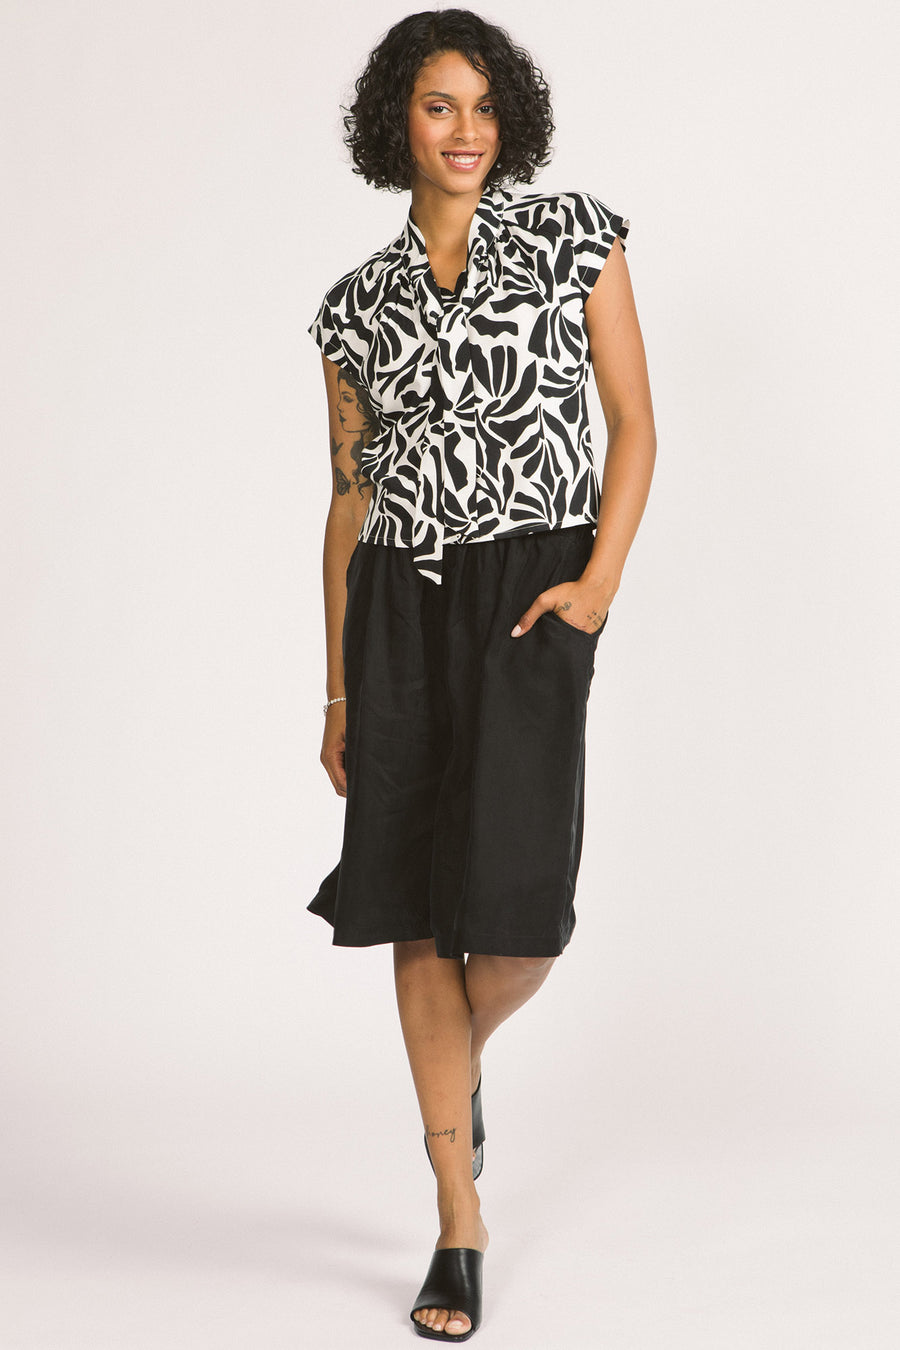 Woman wearing black culotte Yara shorts by Allison Wonderland. 